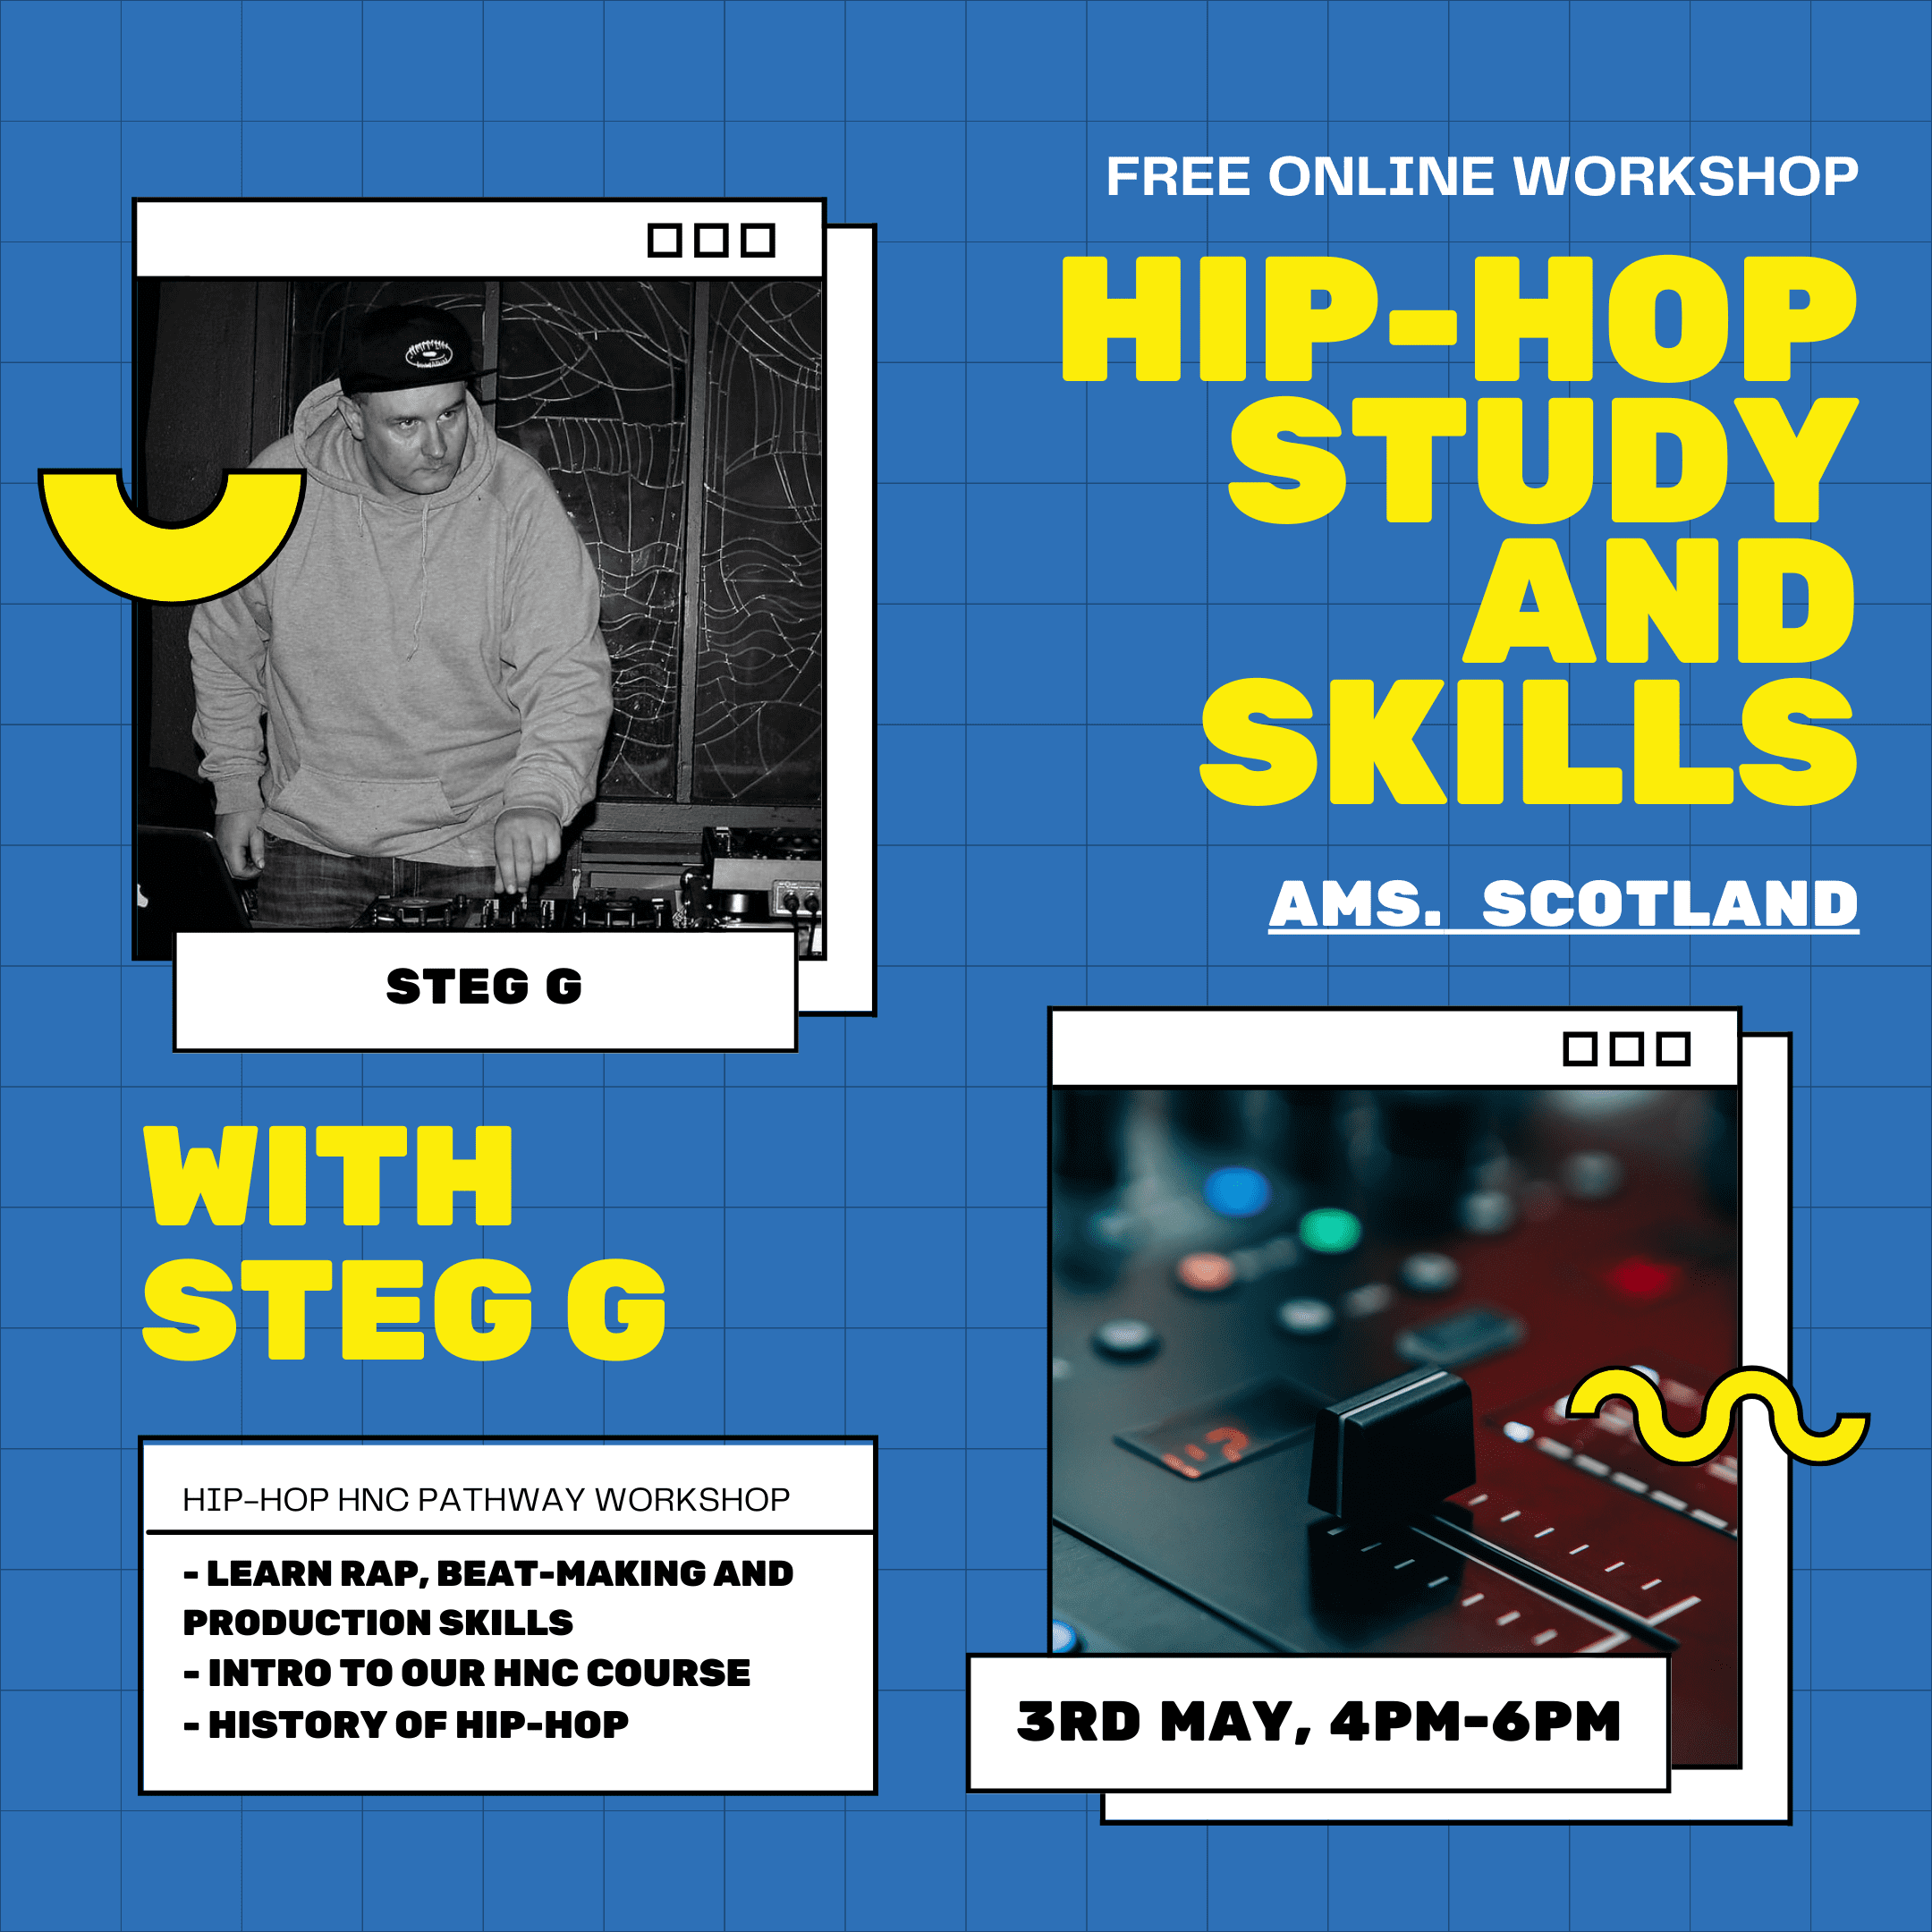 hip hop hnc study and skills workshop free online with steg g scottsih rapper ams scotland hnd course music